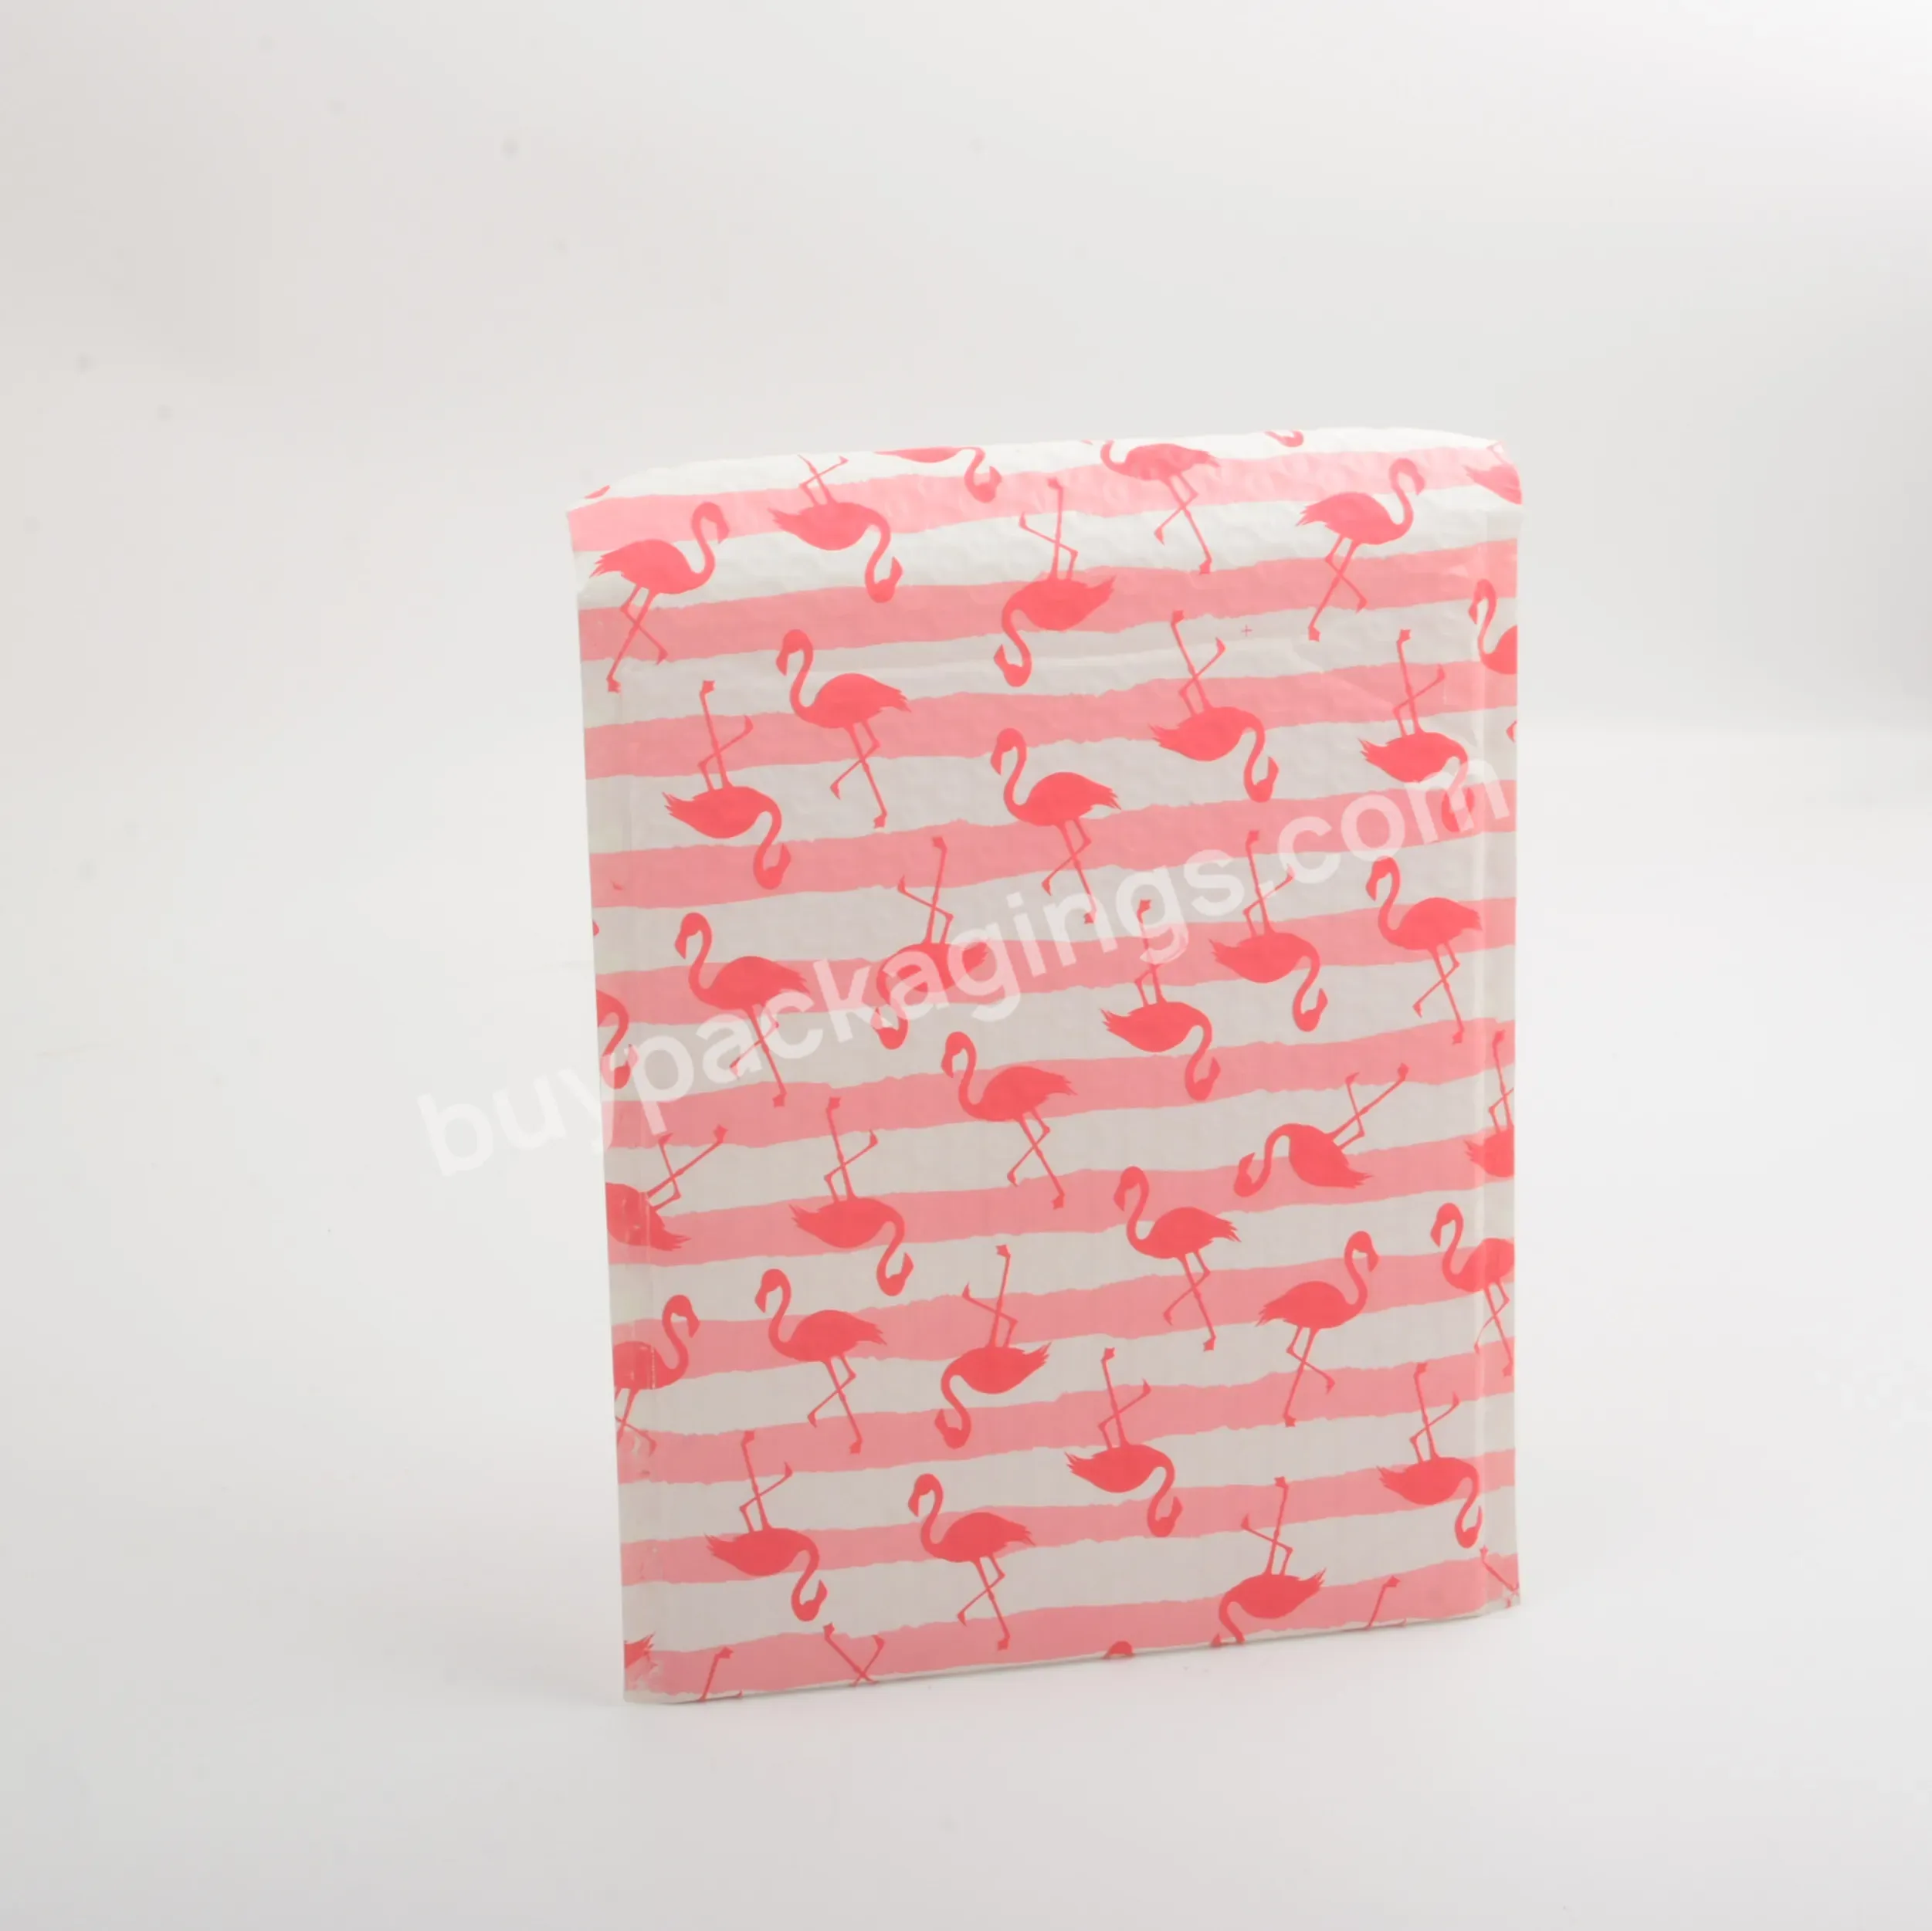 Custom High Quality Shipping Envelope Bags With Wrapped Bubble Bags - Buy High Quality Shipping Envelope Bags,Wrapped Bubble Bags,High Quality Bubble Bags.